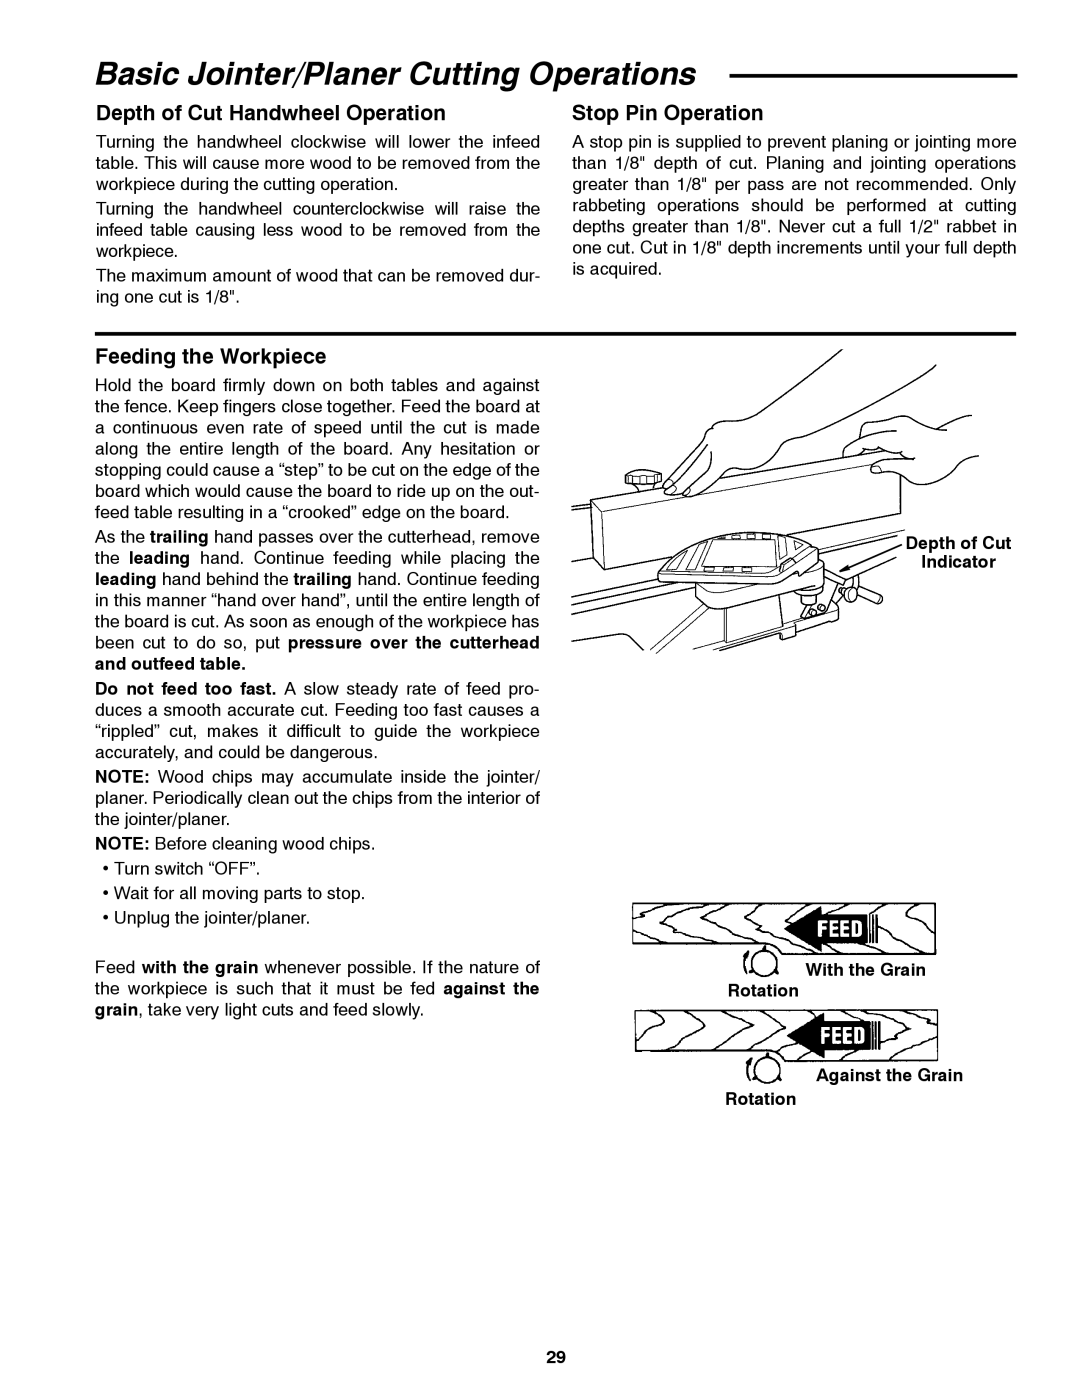 RIDGID JP06101 manual Basic Jointer/Planer Cutting Operations, Depth of Cut Handwheel Operation, Stop Pin Operation 